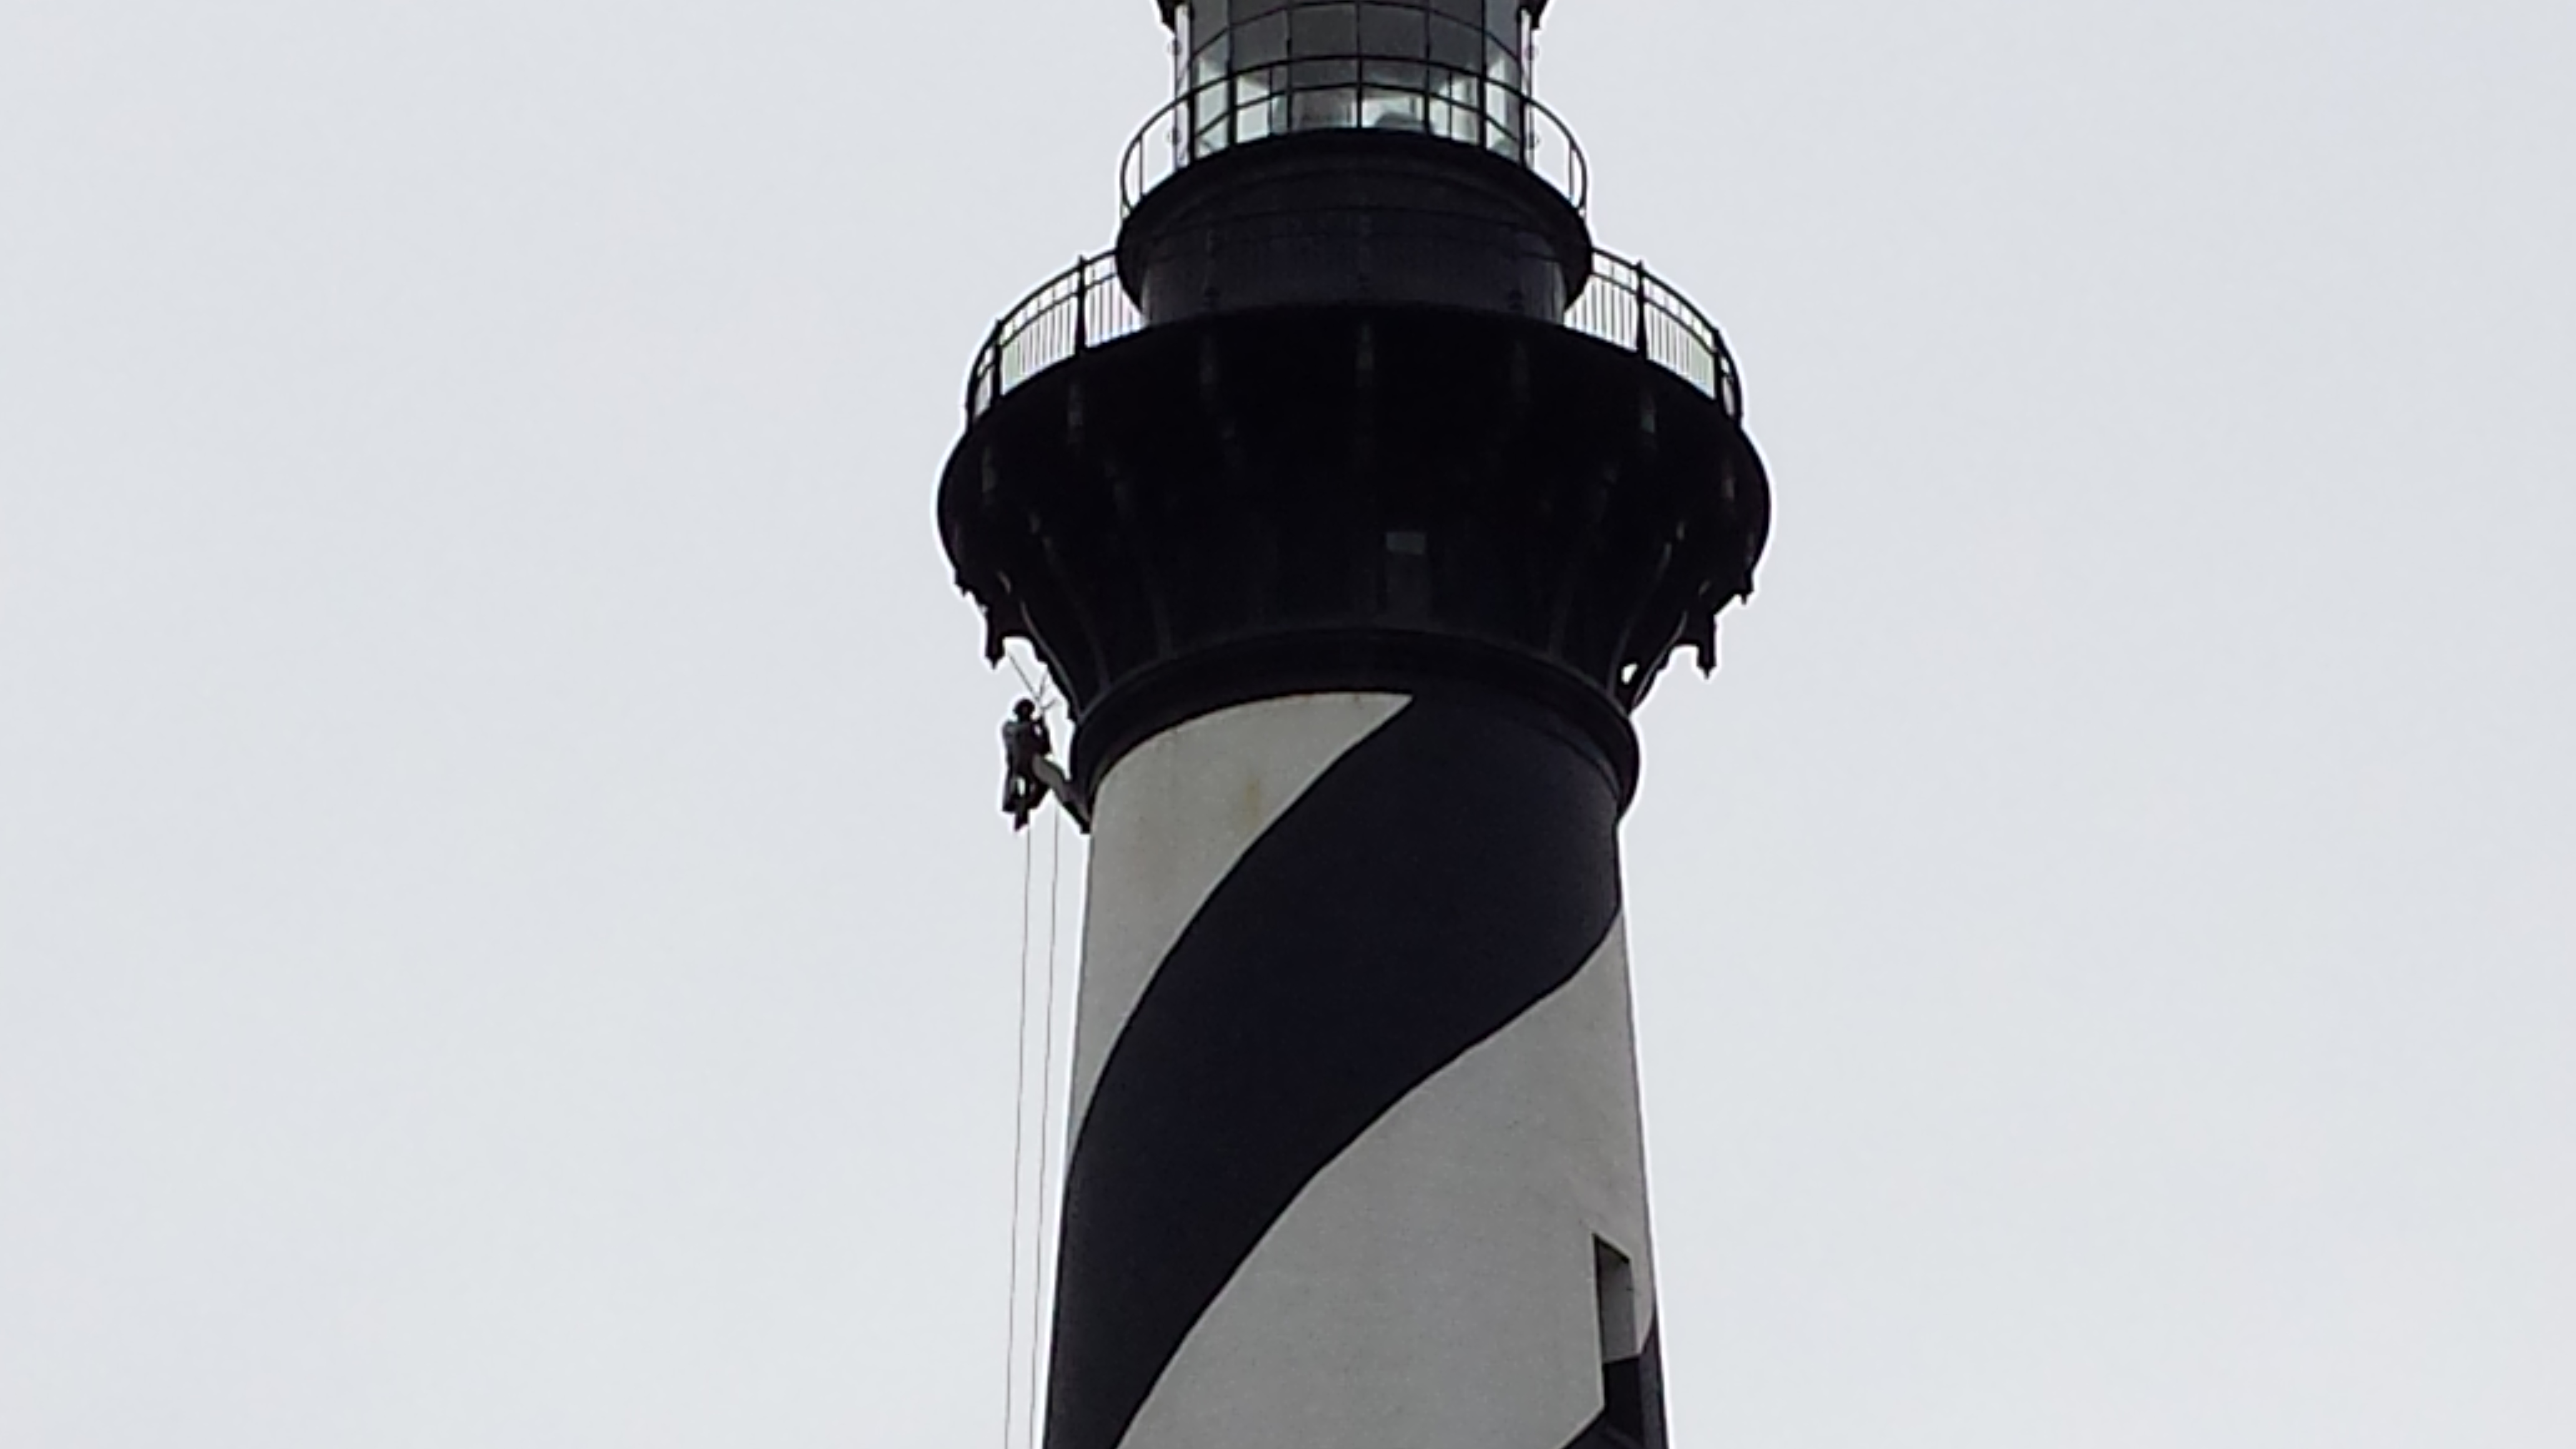 Cape Hatteras Lighthouse inspection. NPS Photo